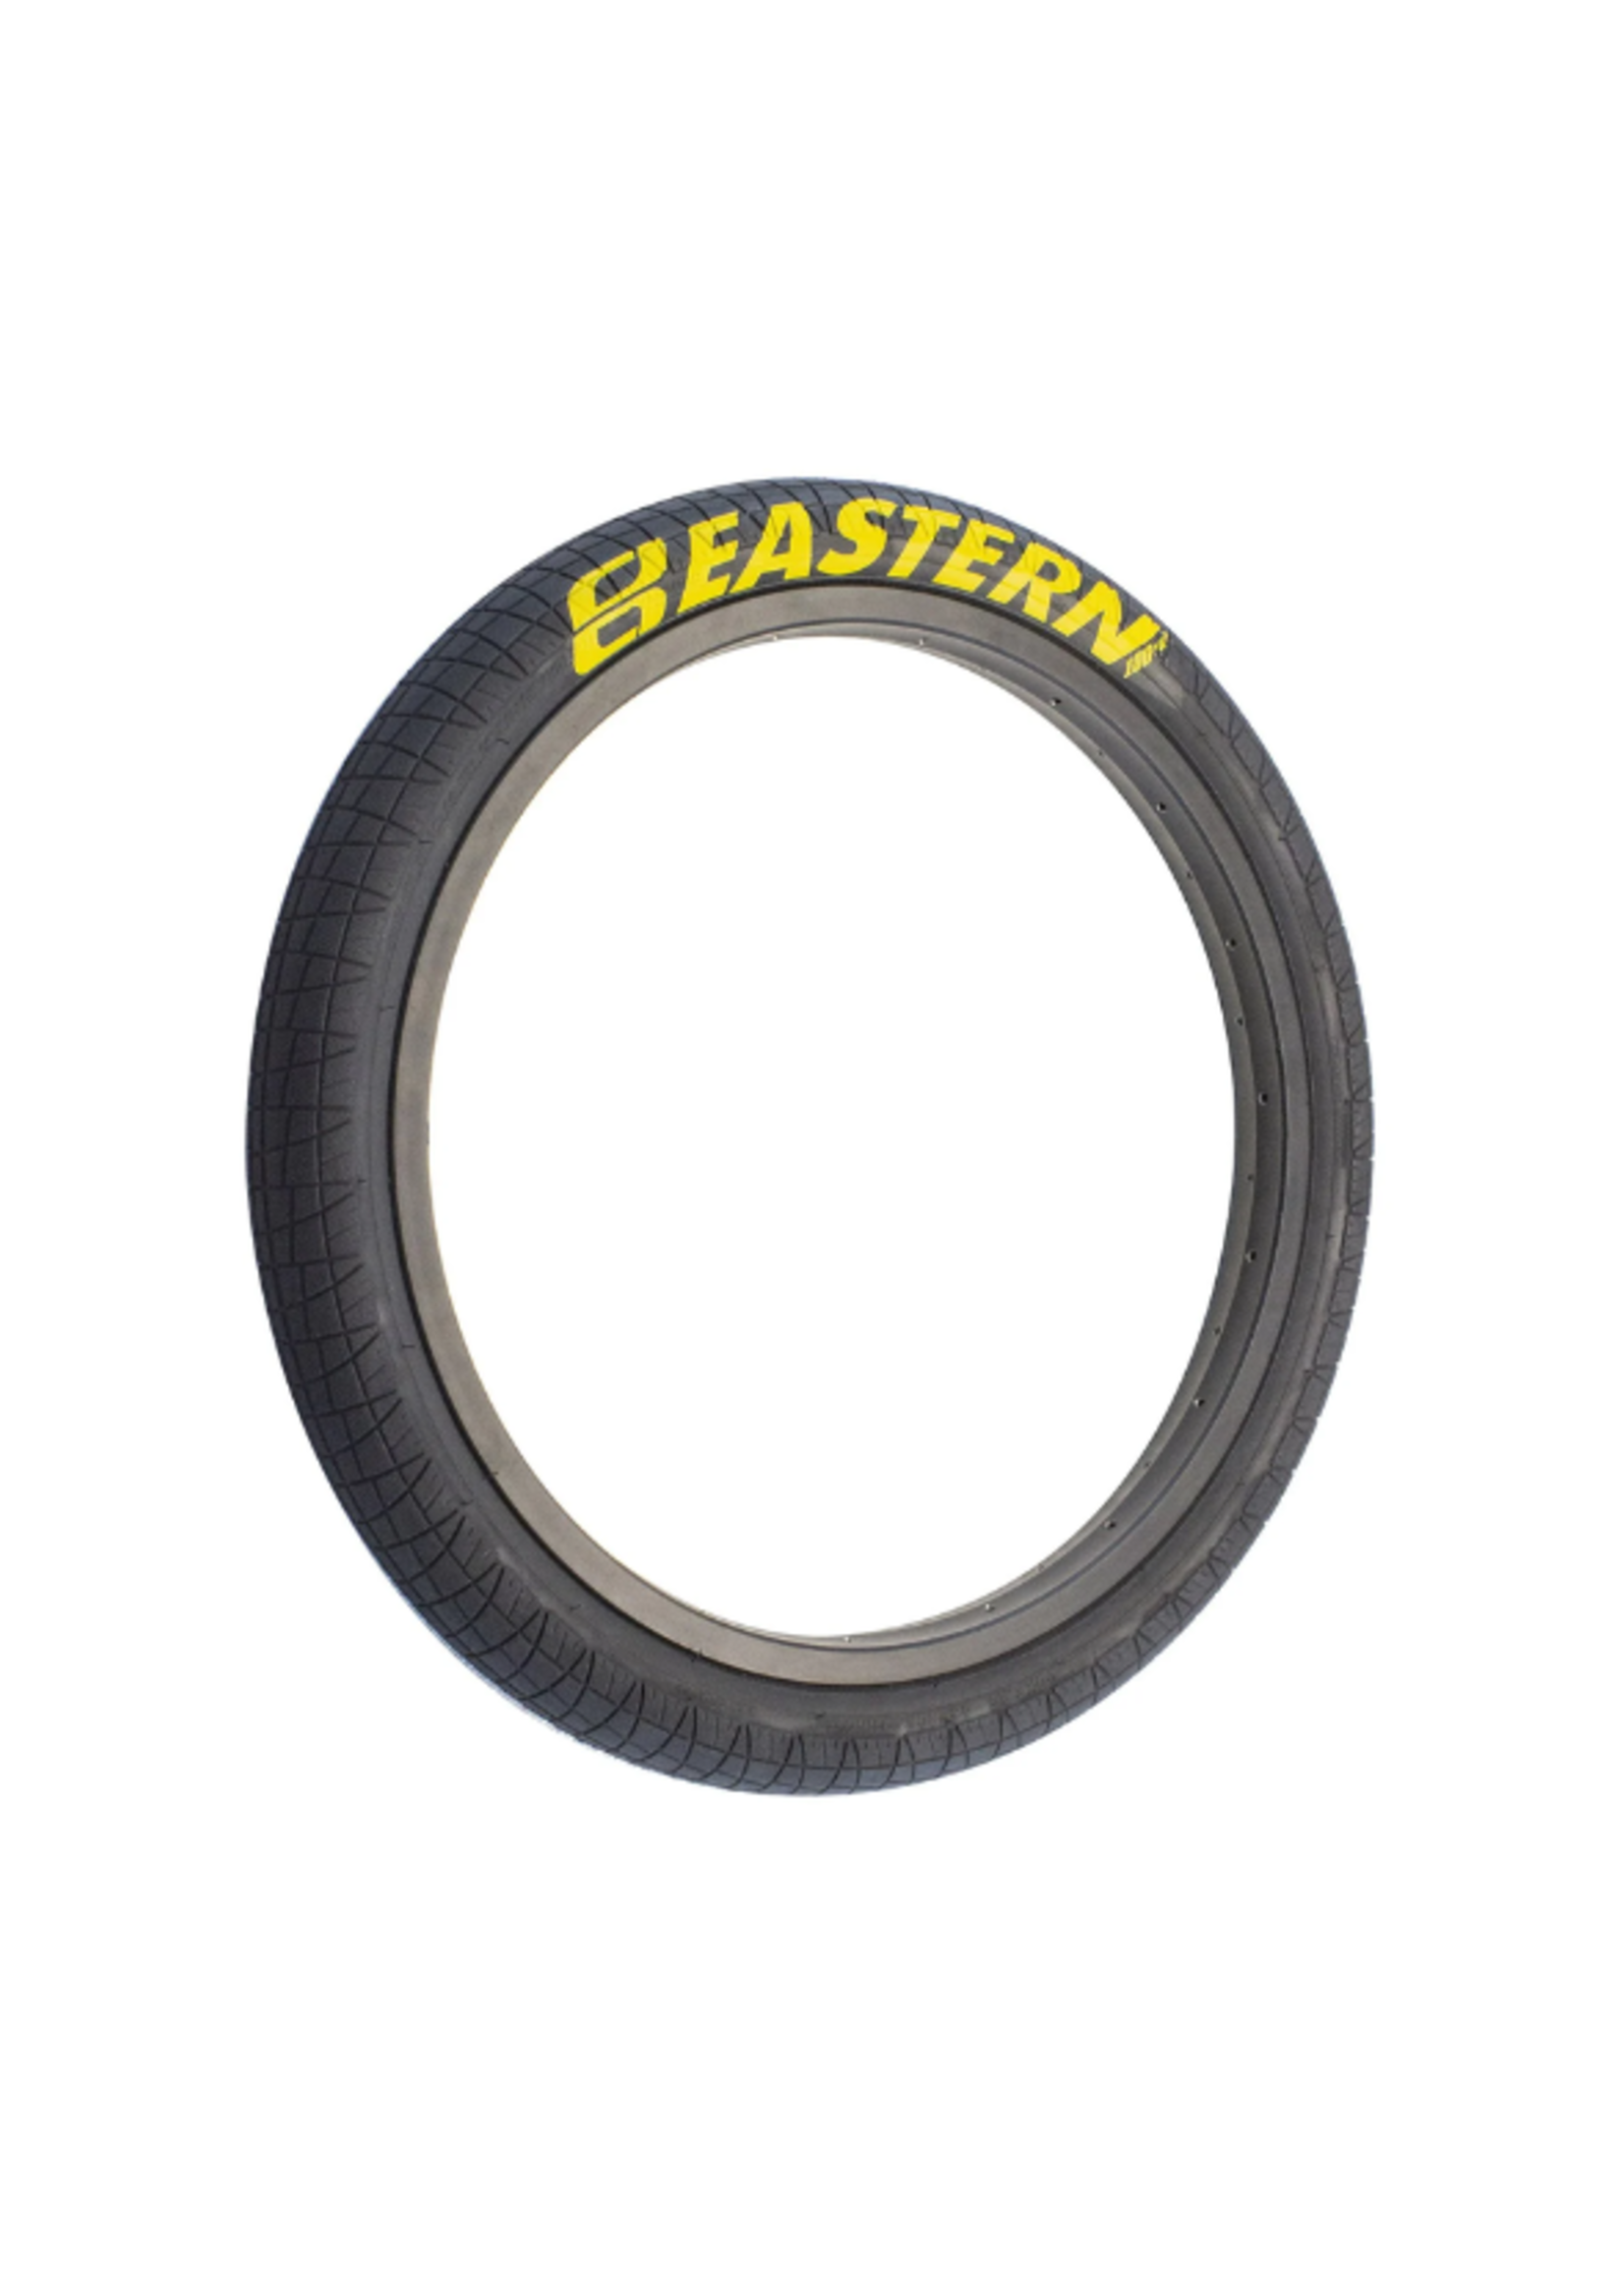 Eastern Eastern 20" Throttle Tires